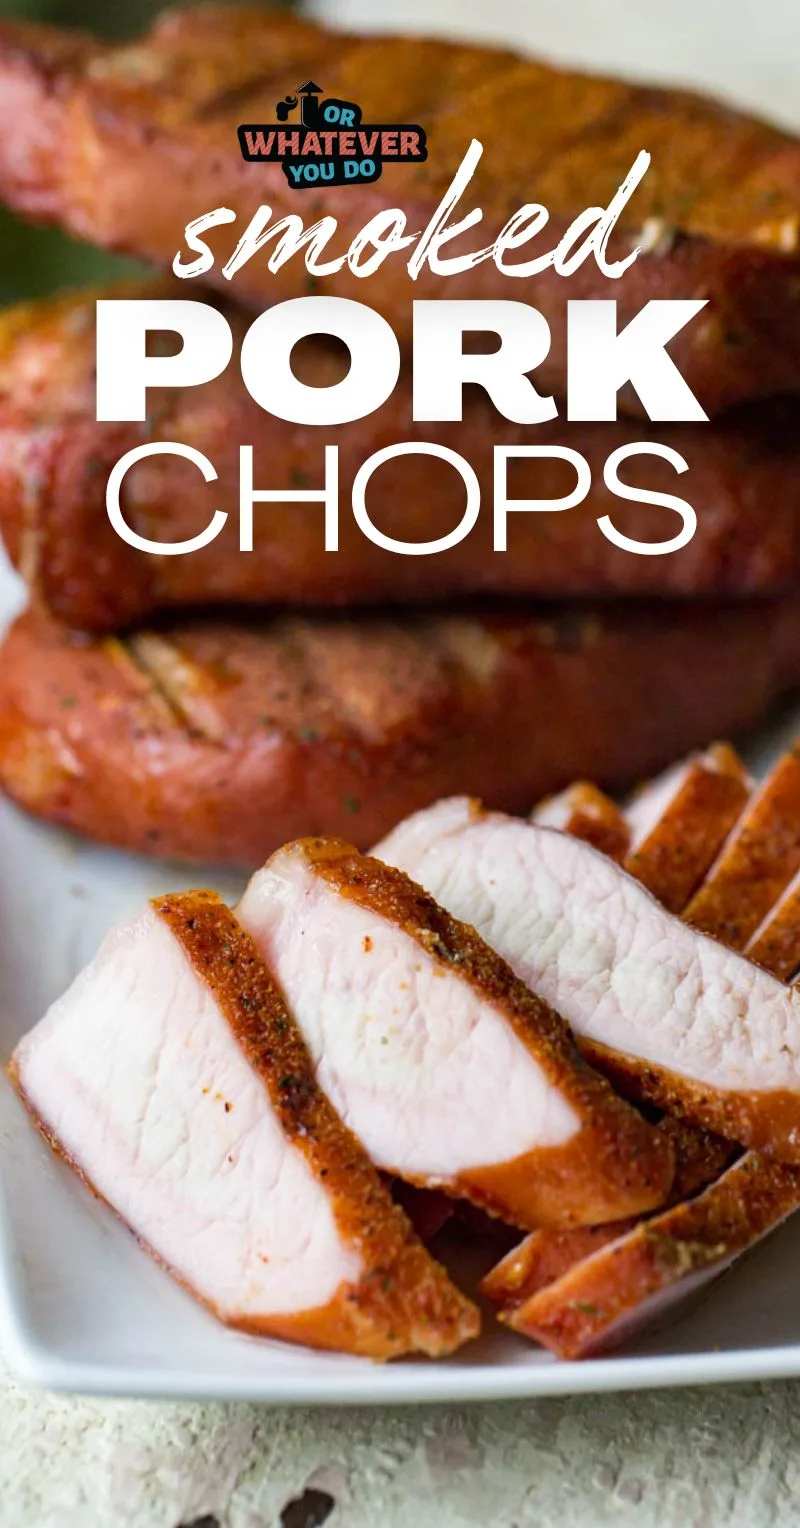 https://www.orwhateveryoudo.com/wp-content/uploads/2019/05/Smoked-Pork-Chops-.jpg.webp